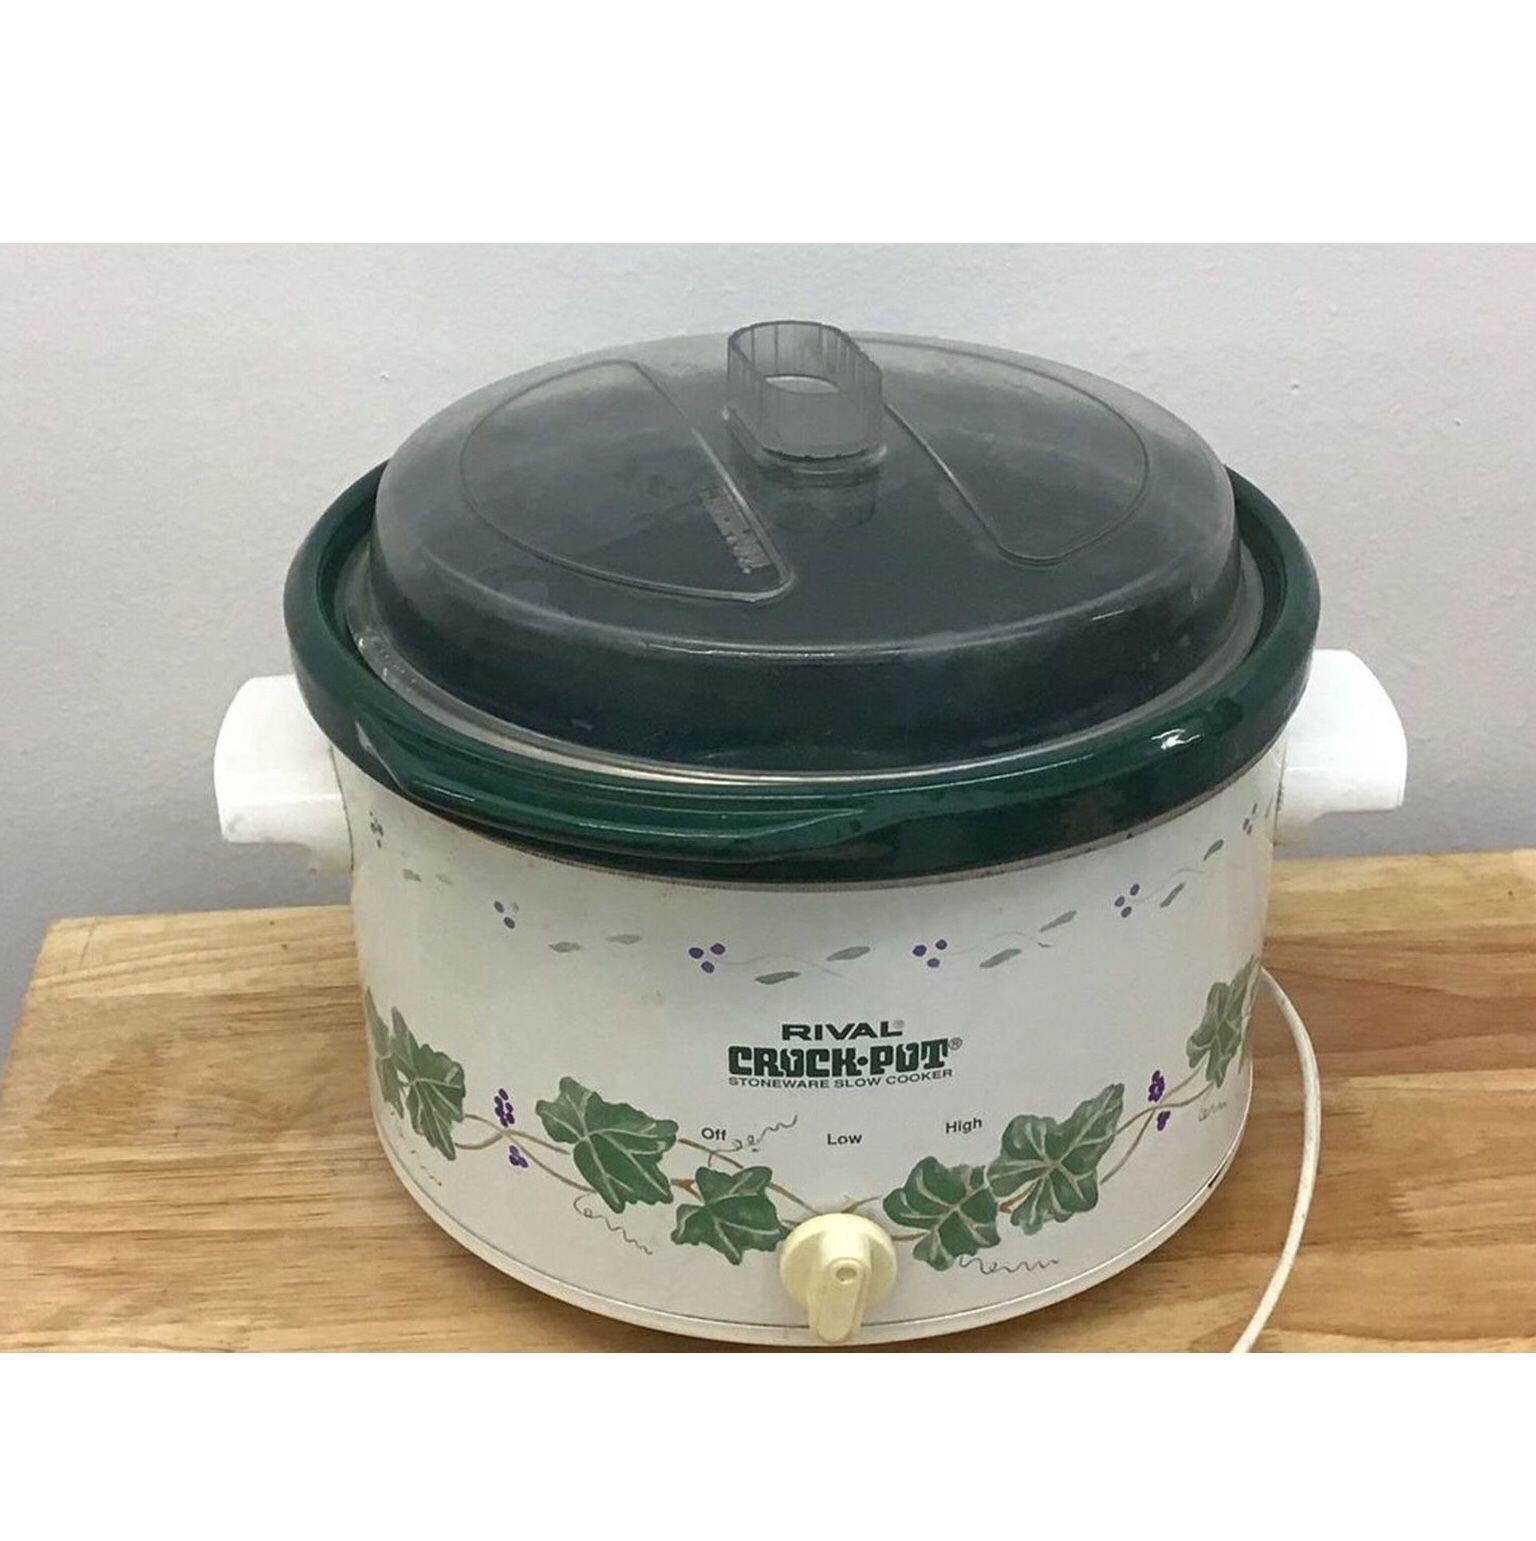 Like new Vintage Rival Crock Pot Slow Cooker 3150 - appliances - by owner -  sale - craigslist